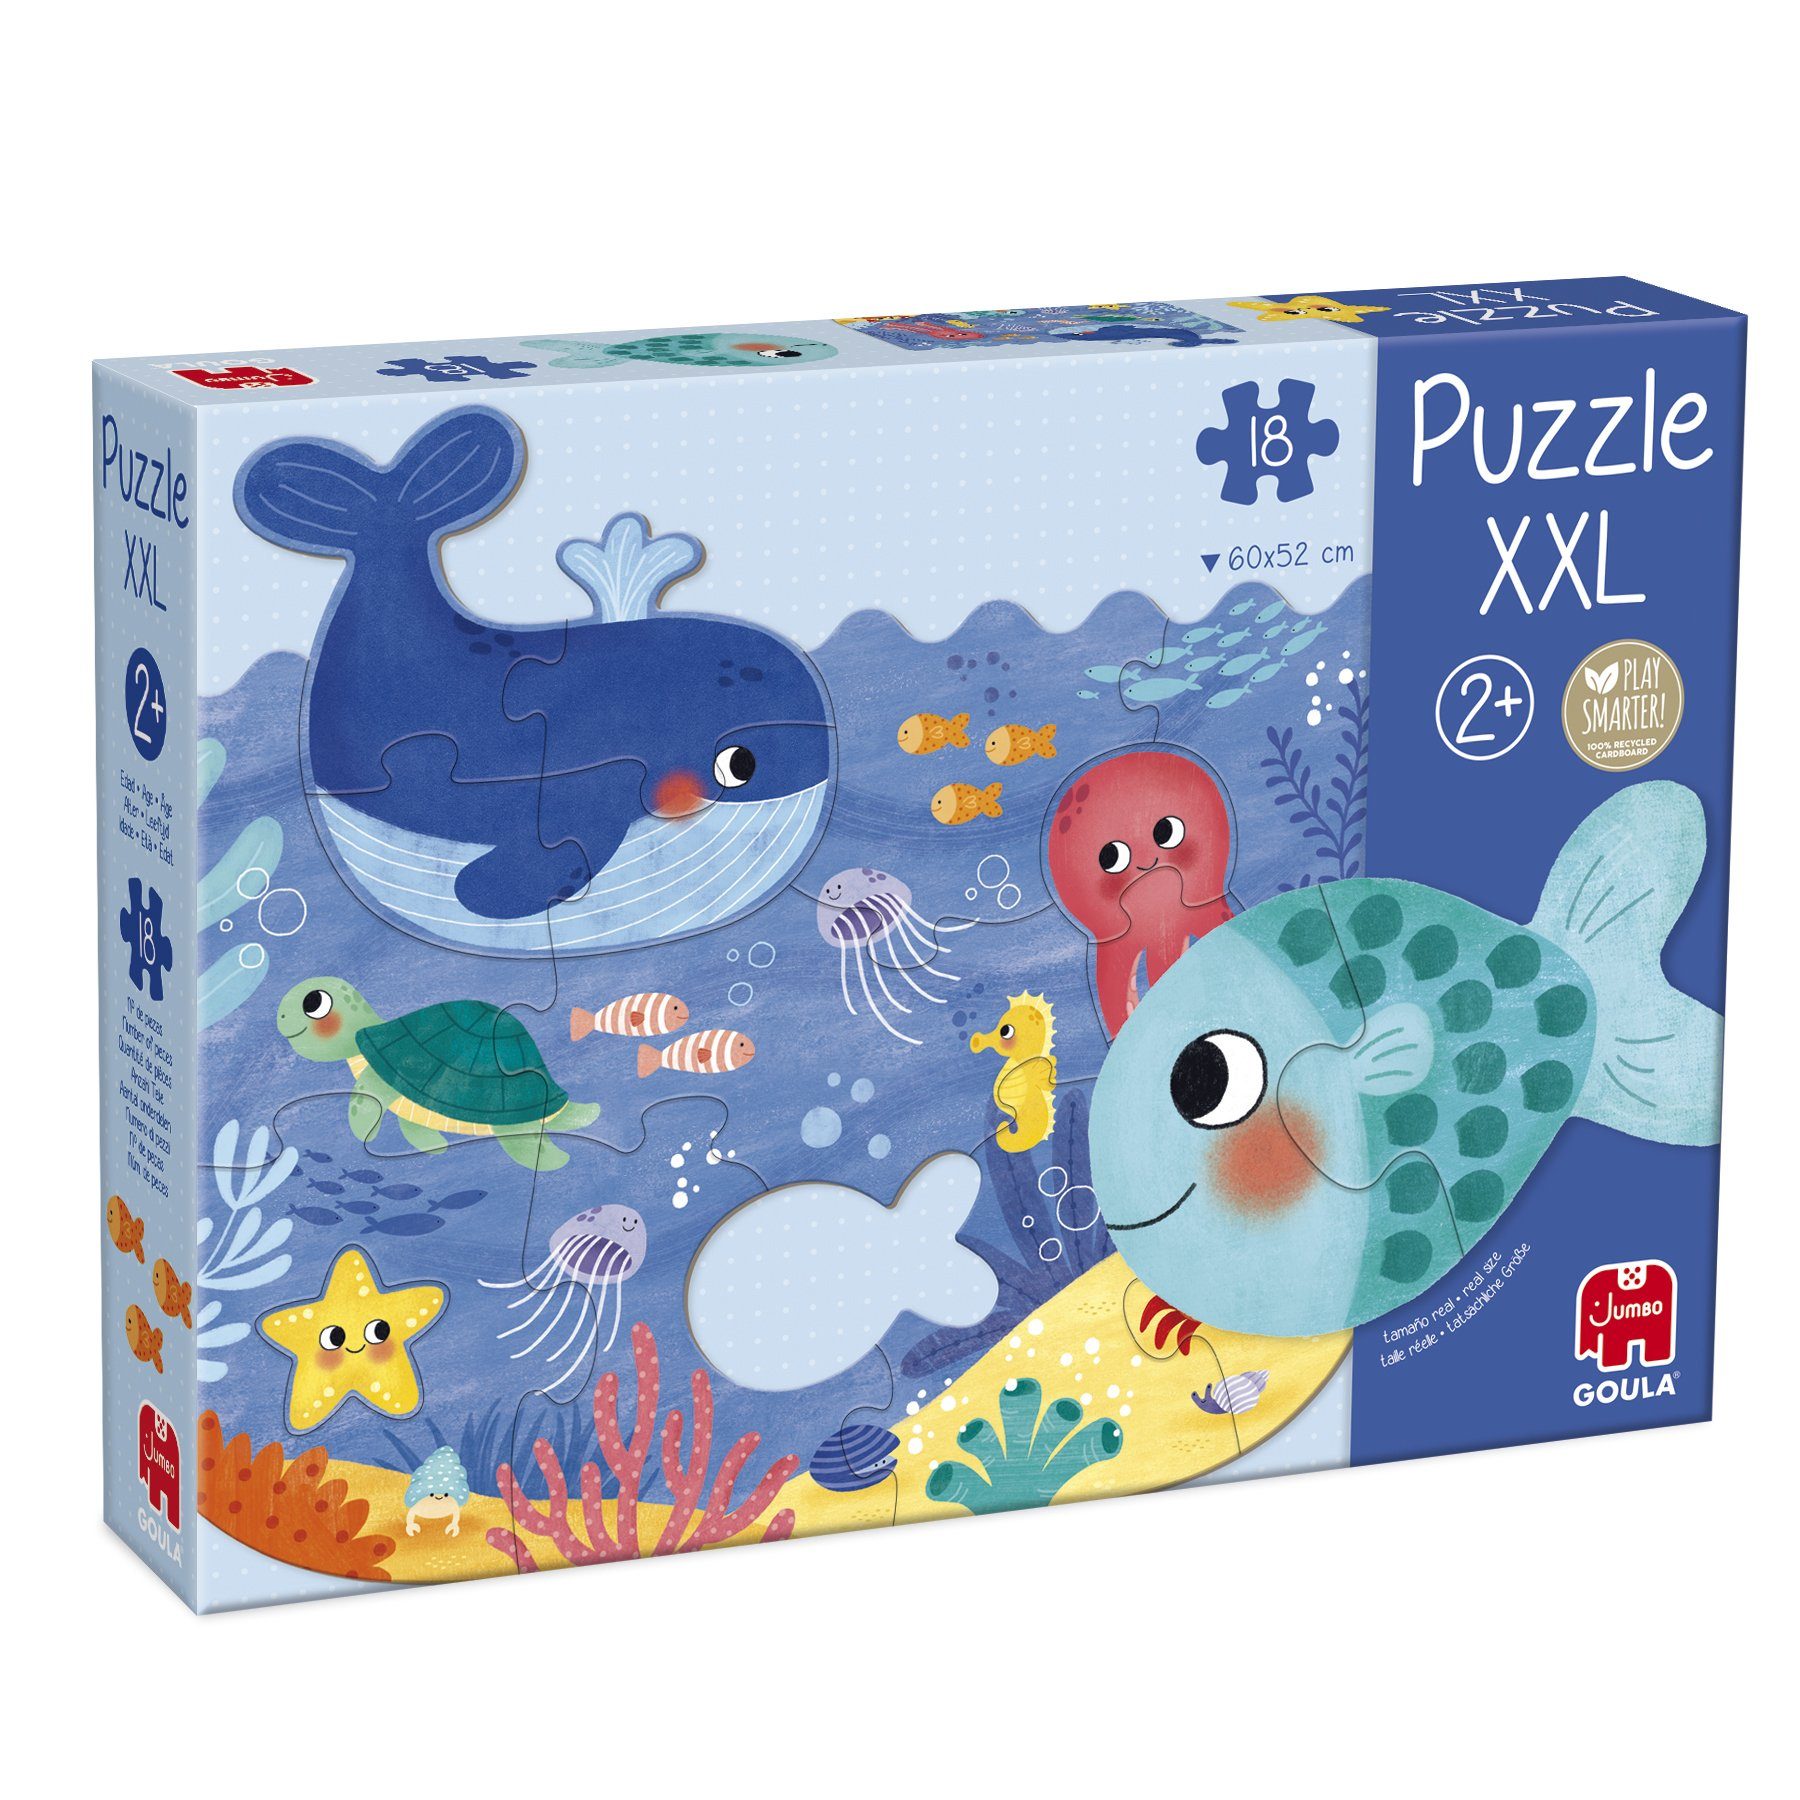 Jumbo Spiele Goula Puzzle Goula 1120700014 Ozean 18 Teile XXL Puzzle, 18 Puzzleteile, Made in Europe